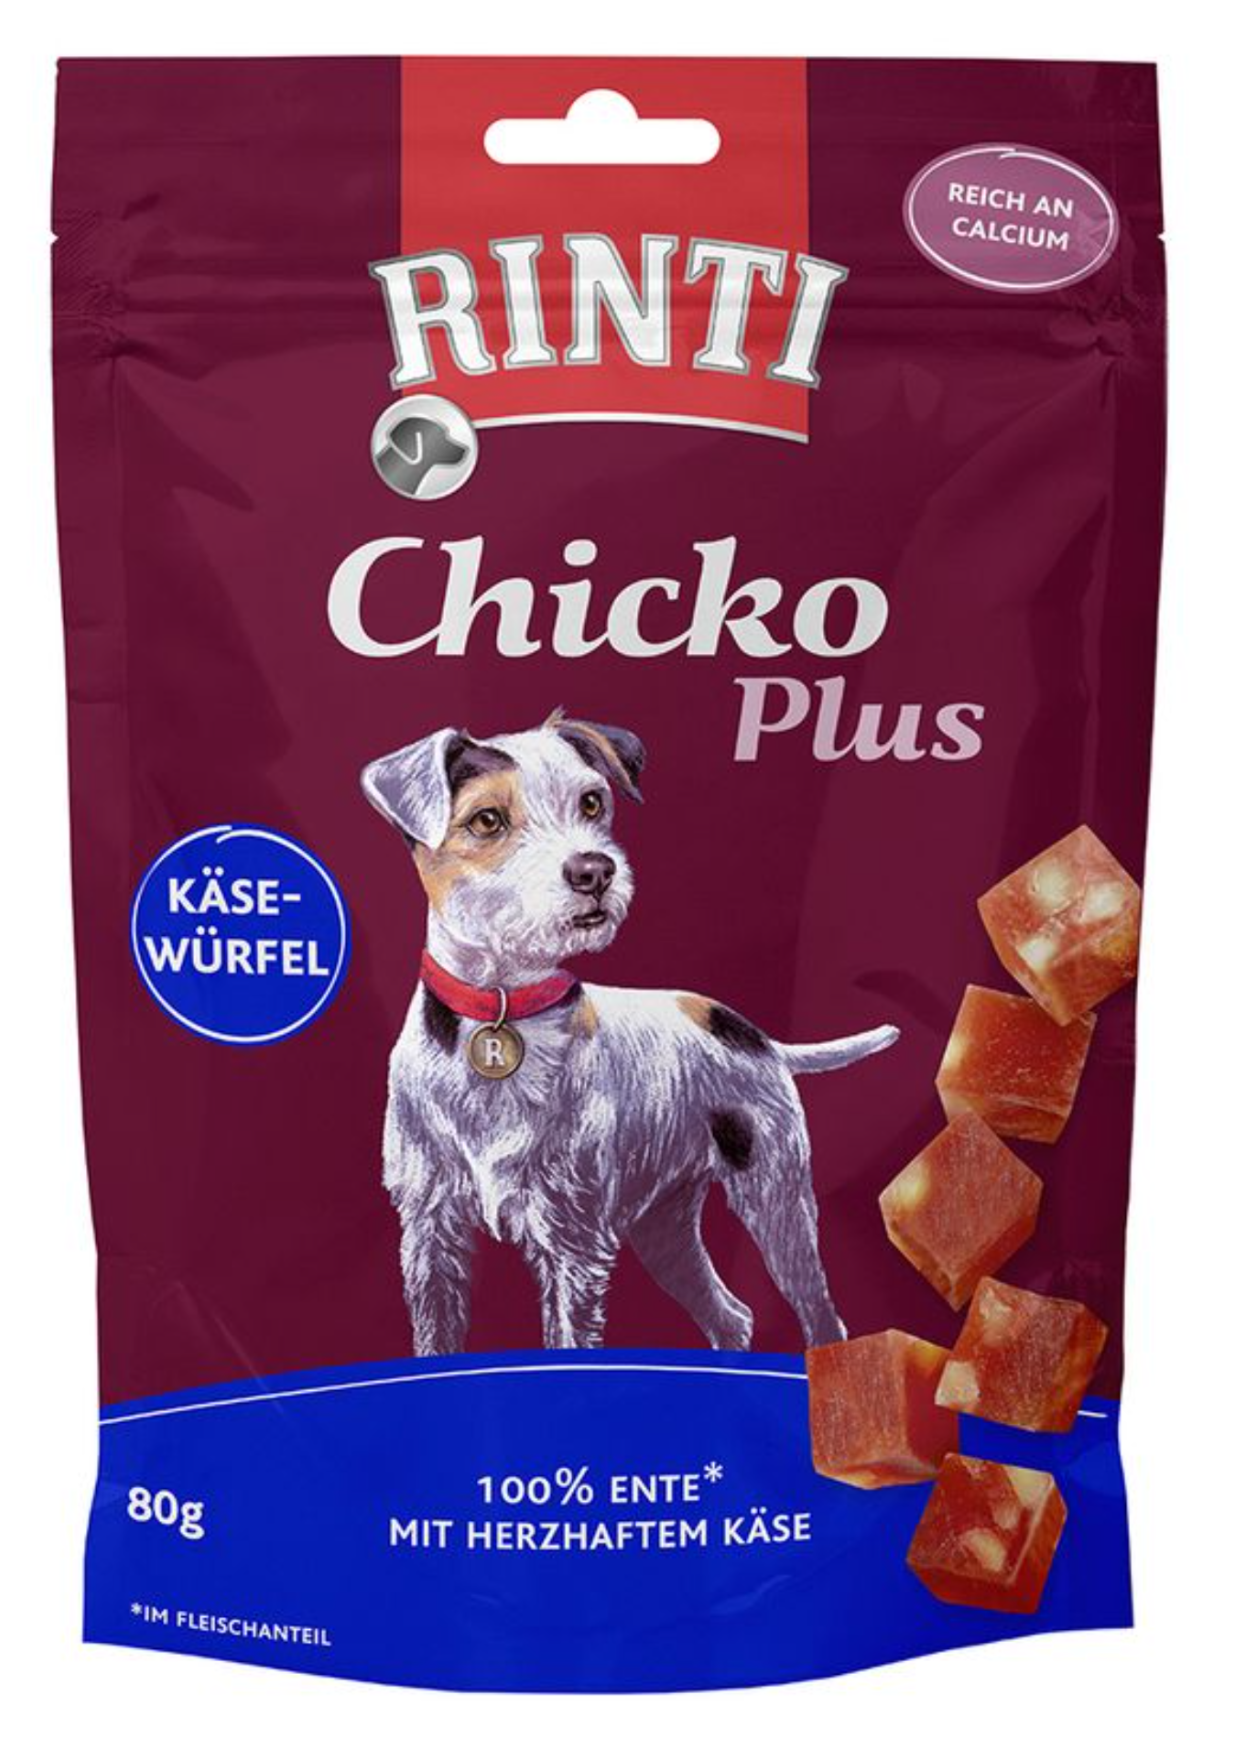 Rinti Chicko Plus - Ente mit Käse Würfel